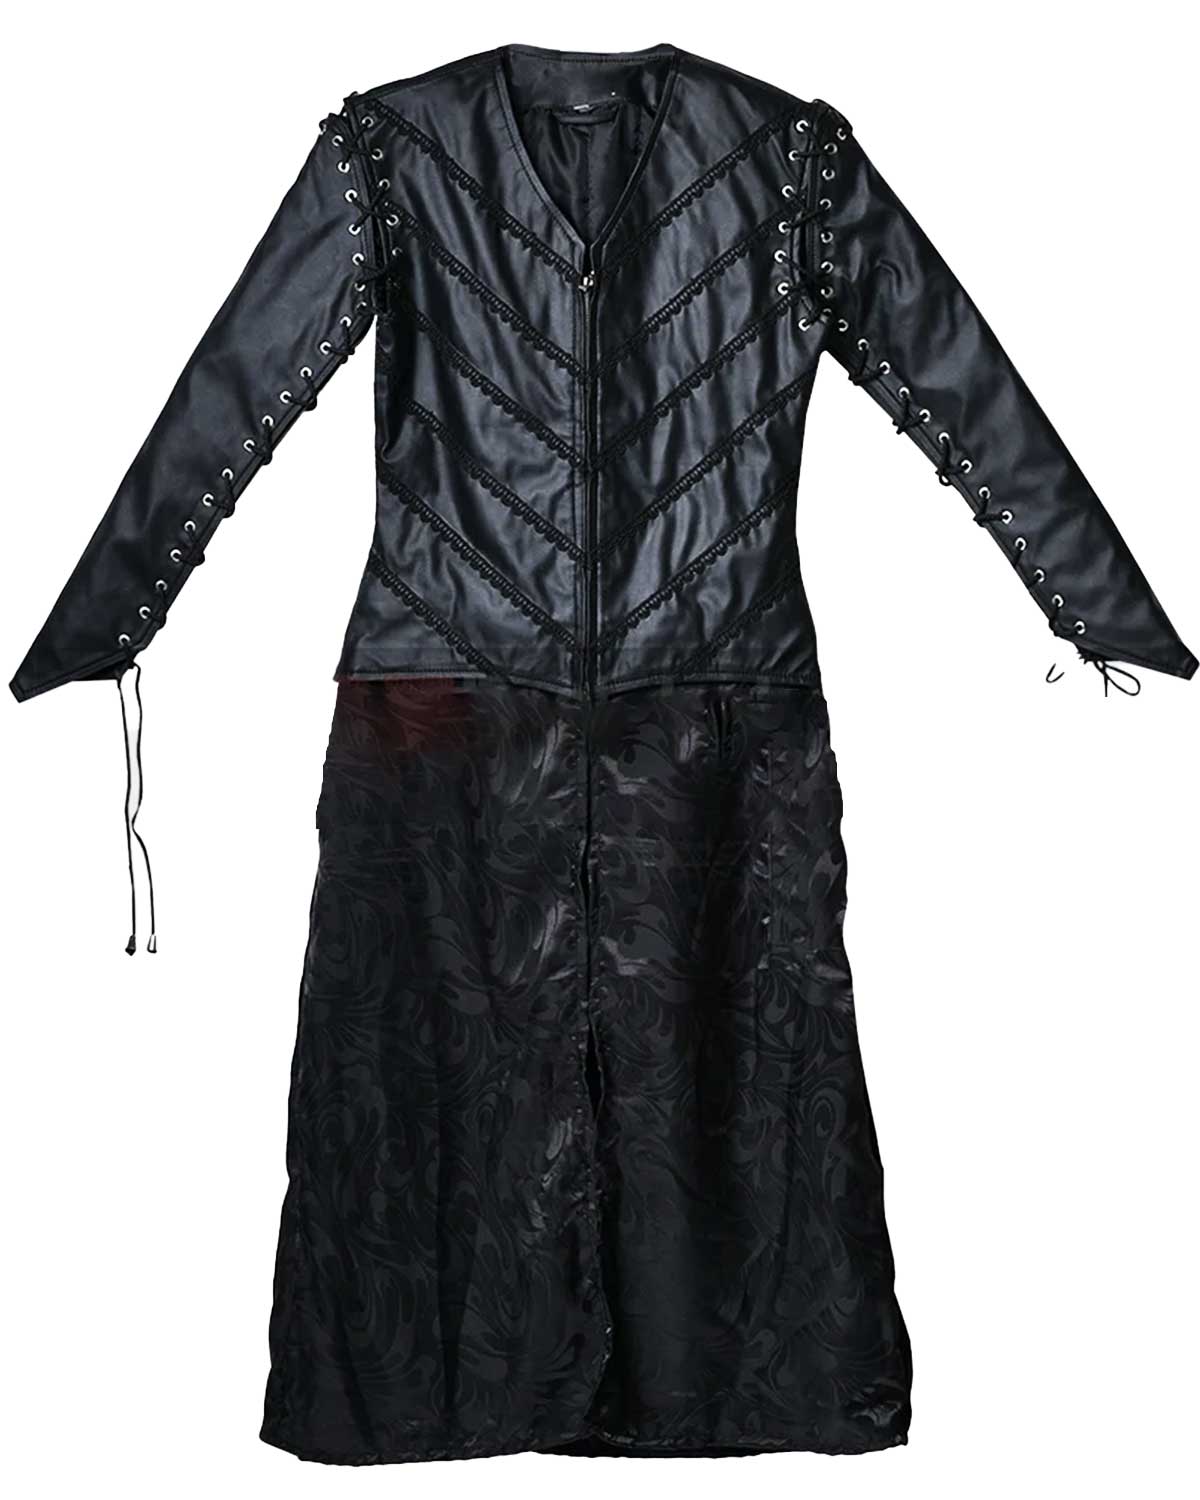 Bellatrix Lestrange Harry Potter Halloween Costume | Elite Jacket